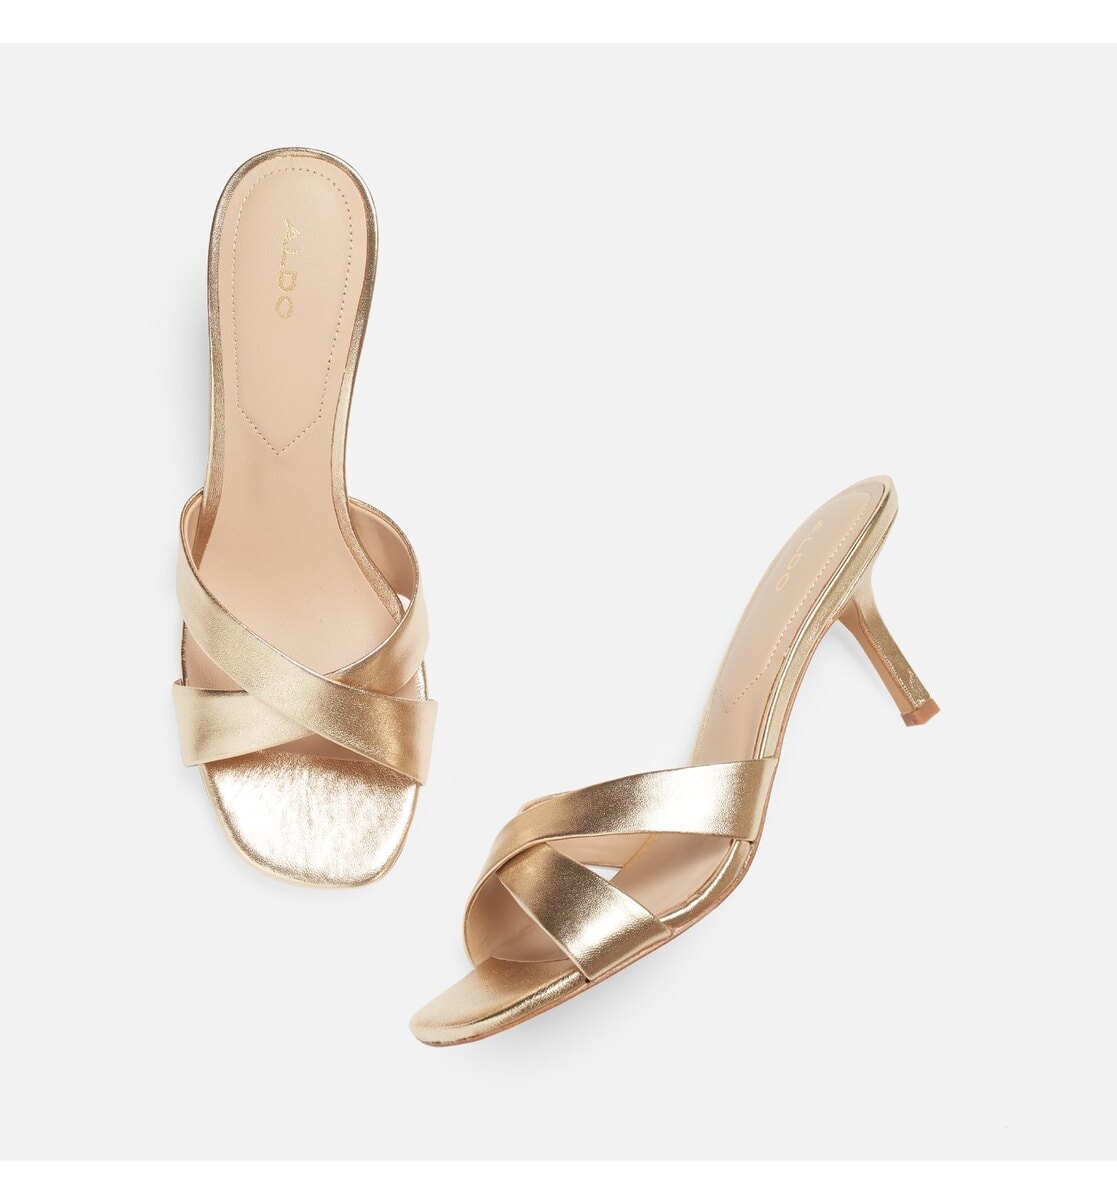 Buy Gold Heeled Sandals for Women by Aldo Ajio.com